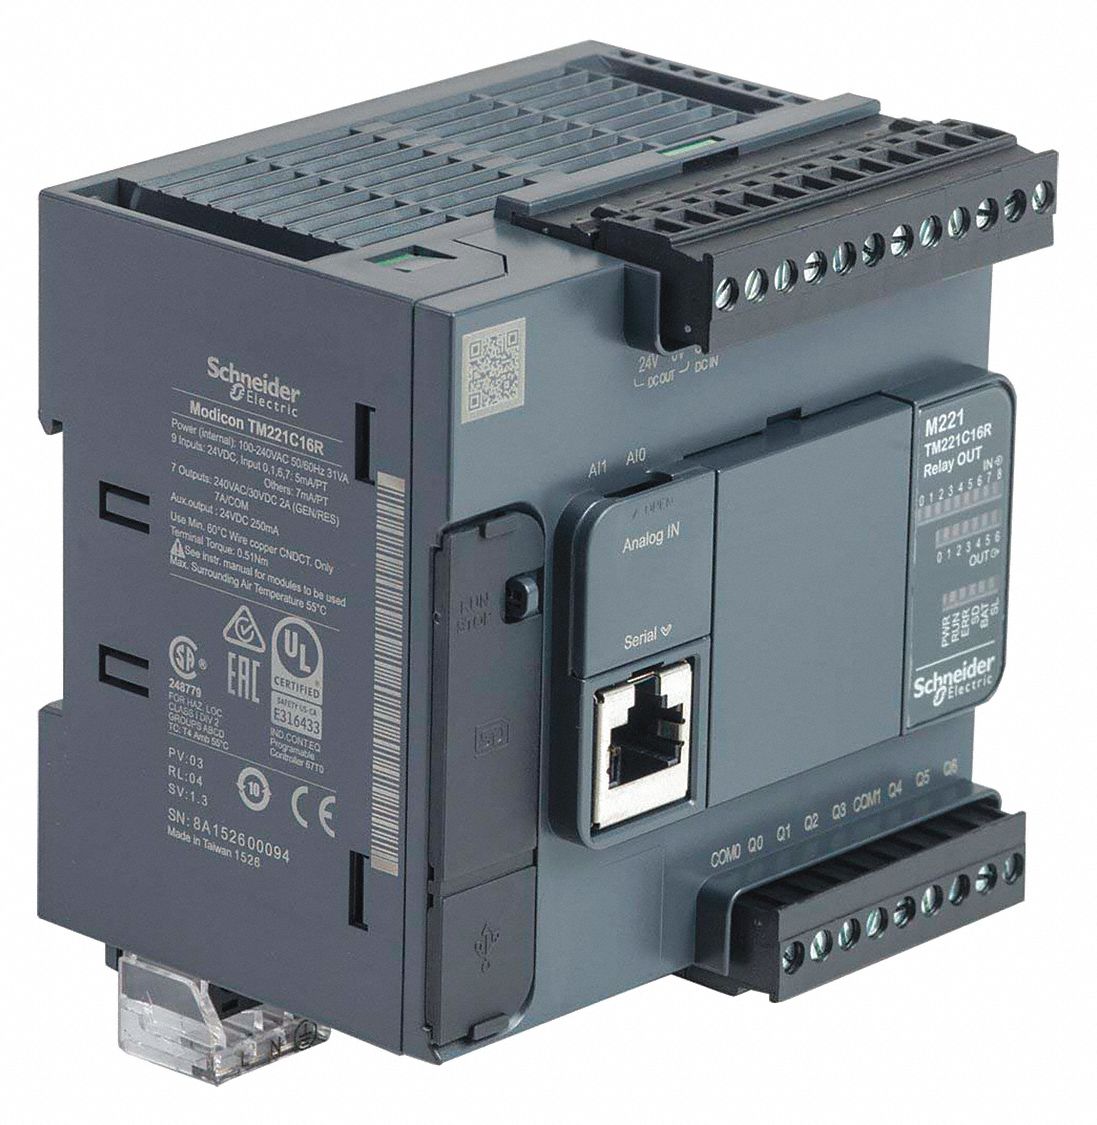 35LX34 - Controller 24VDC/240VAC Relay Compact